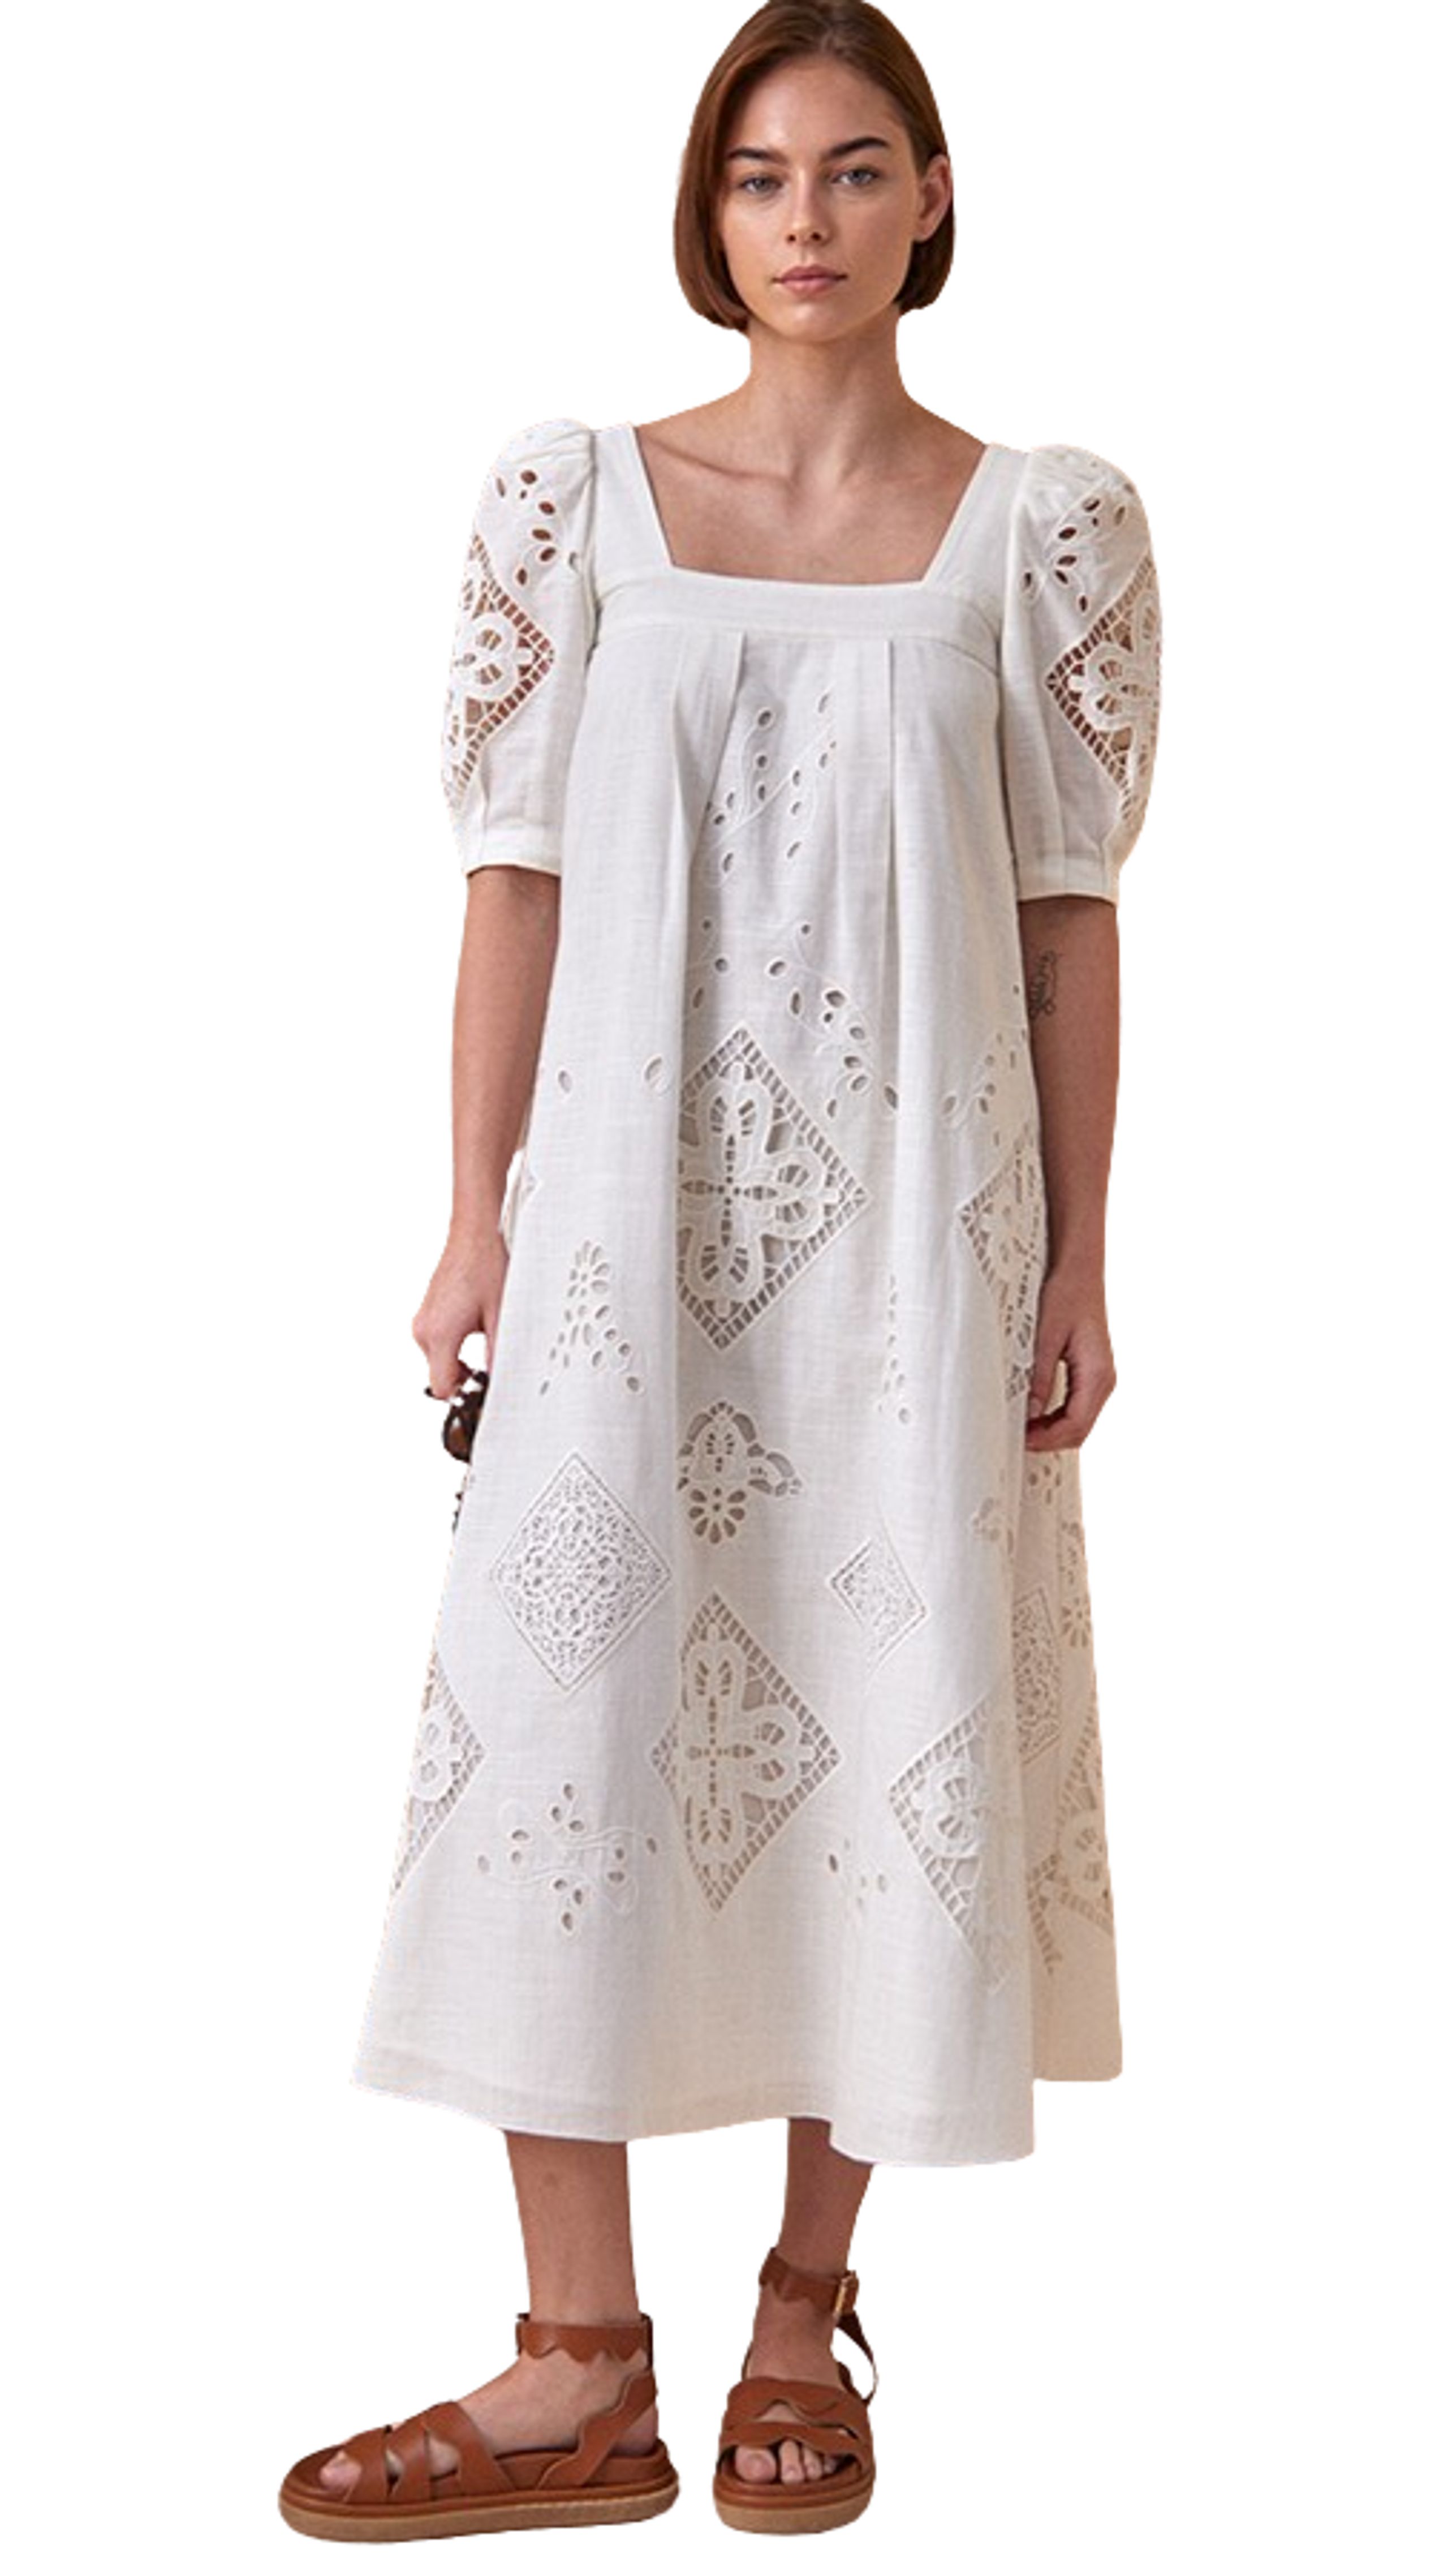 Hunter Bell Waverly Dress, White Eyelet | Monkee's of Mount Pleasant